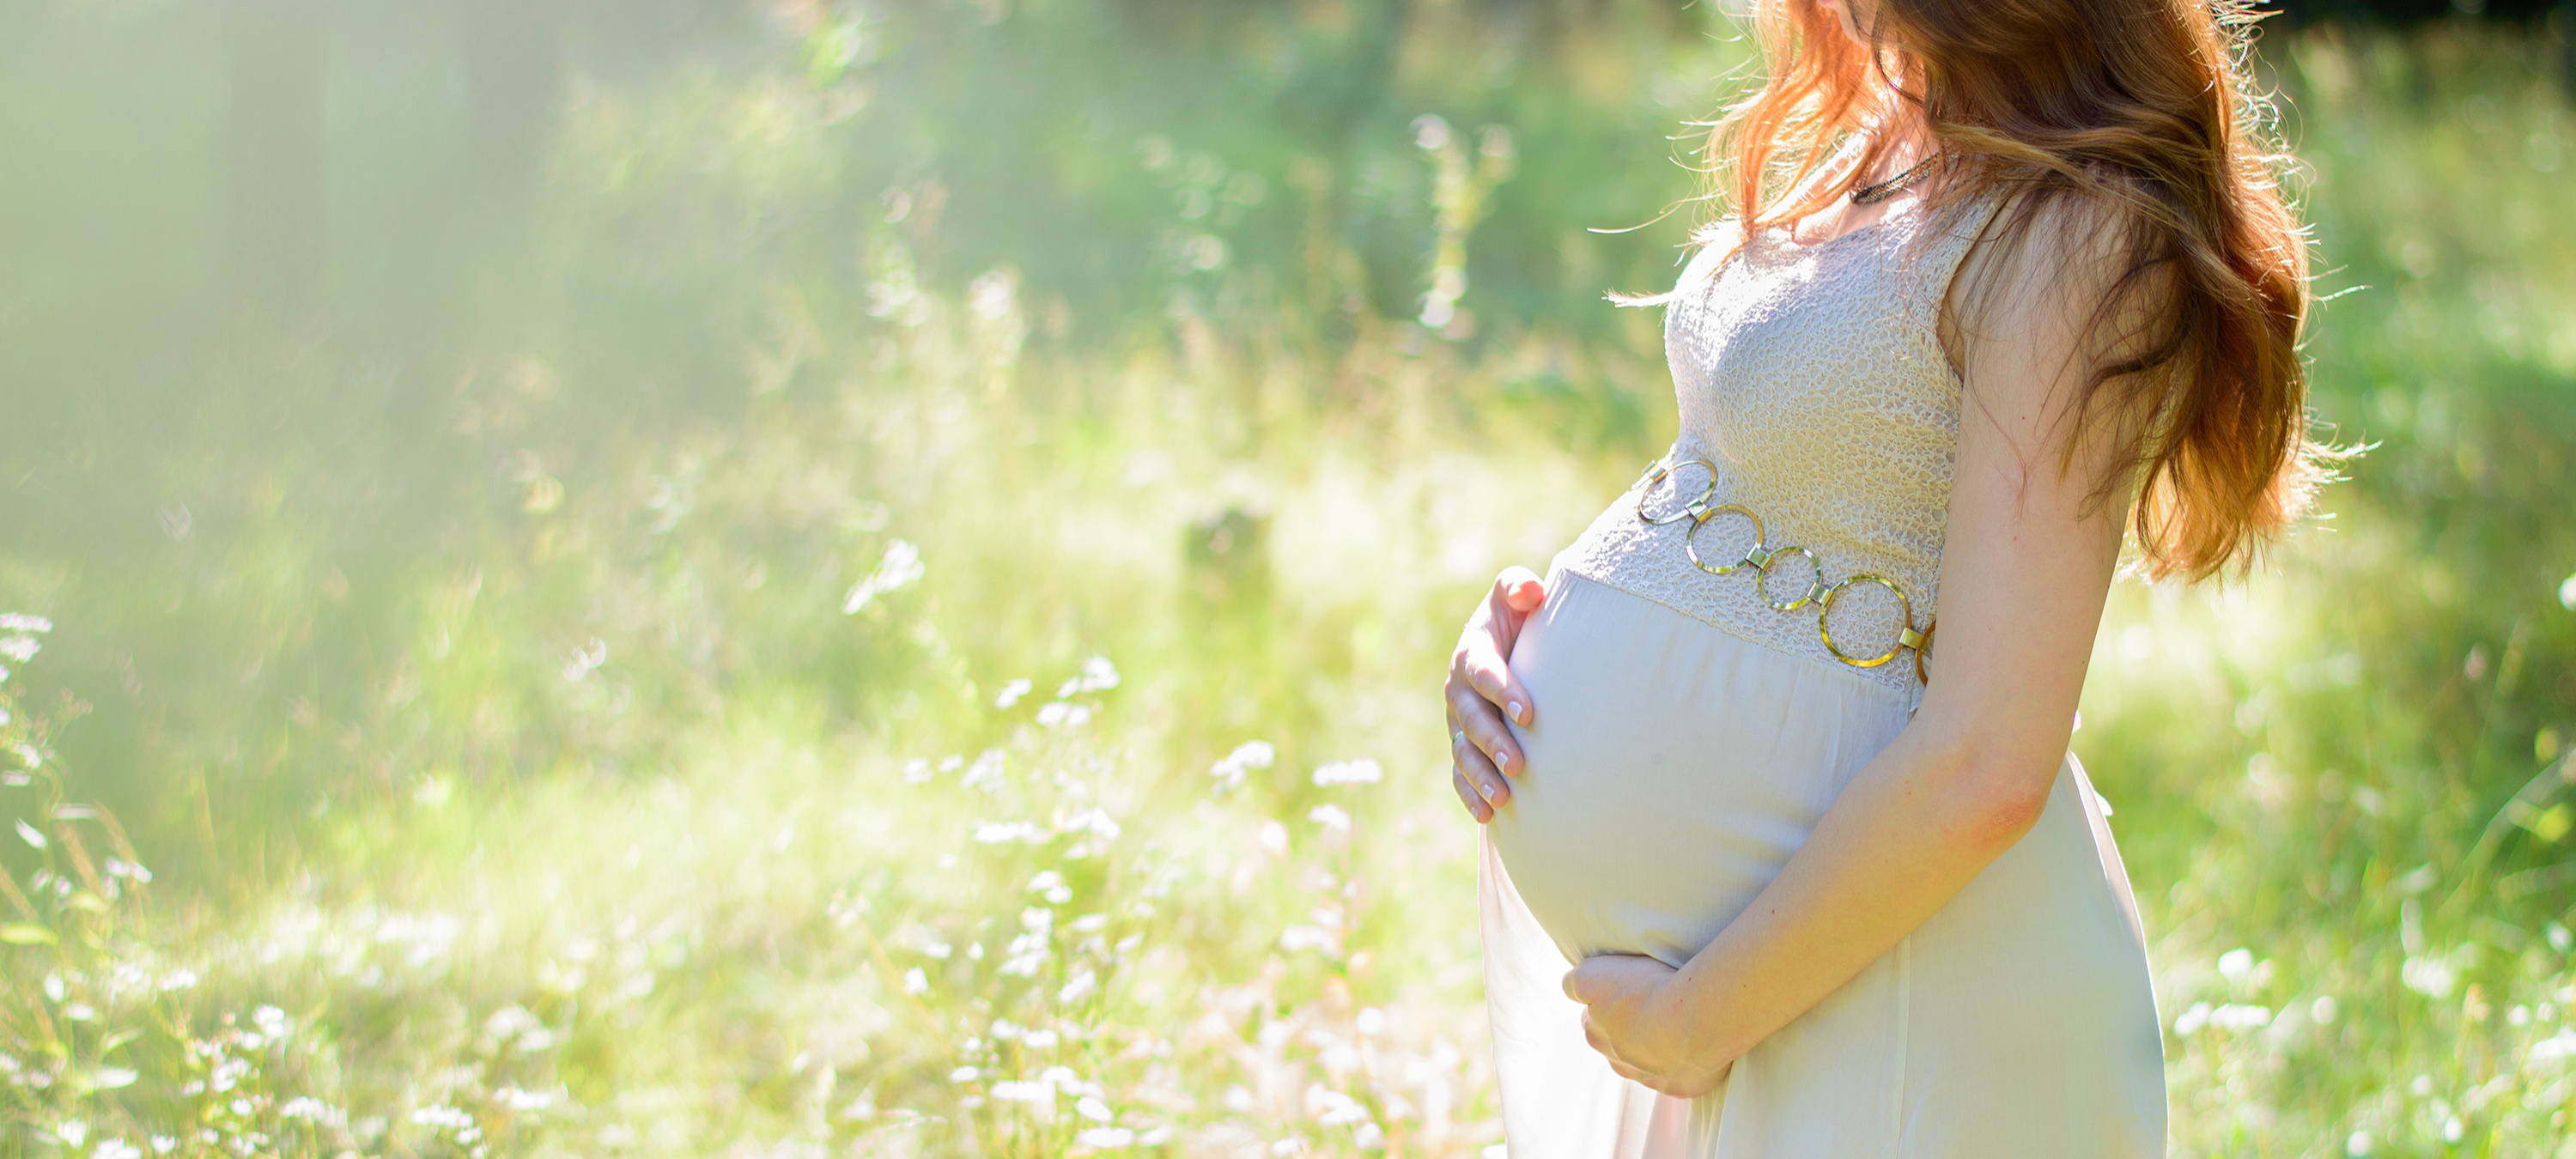 Ernährung während der Schwangerschaft | Welche Lebensmittel solltest du während der Schwangerschaft meiden